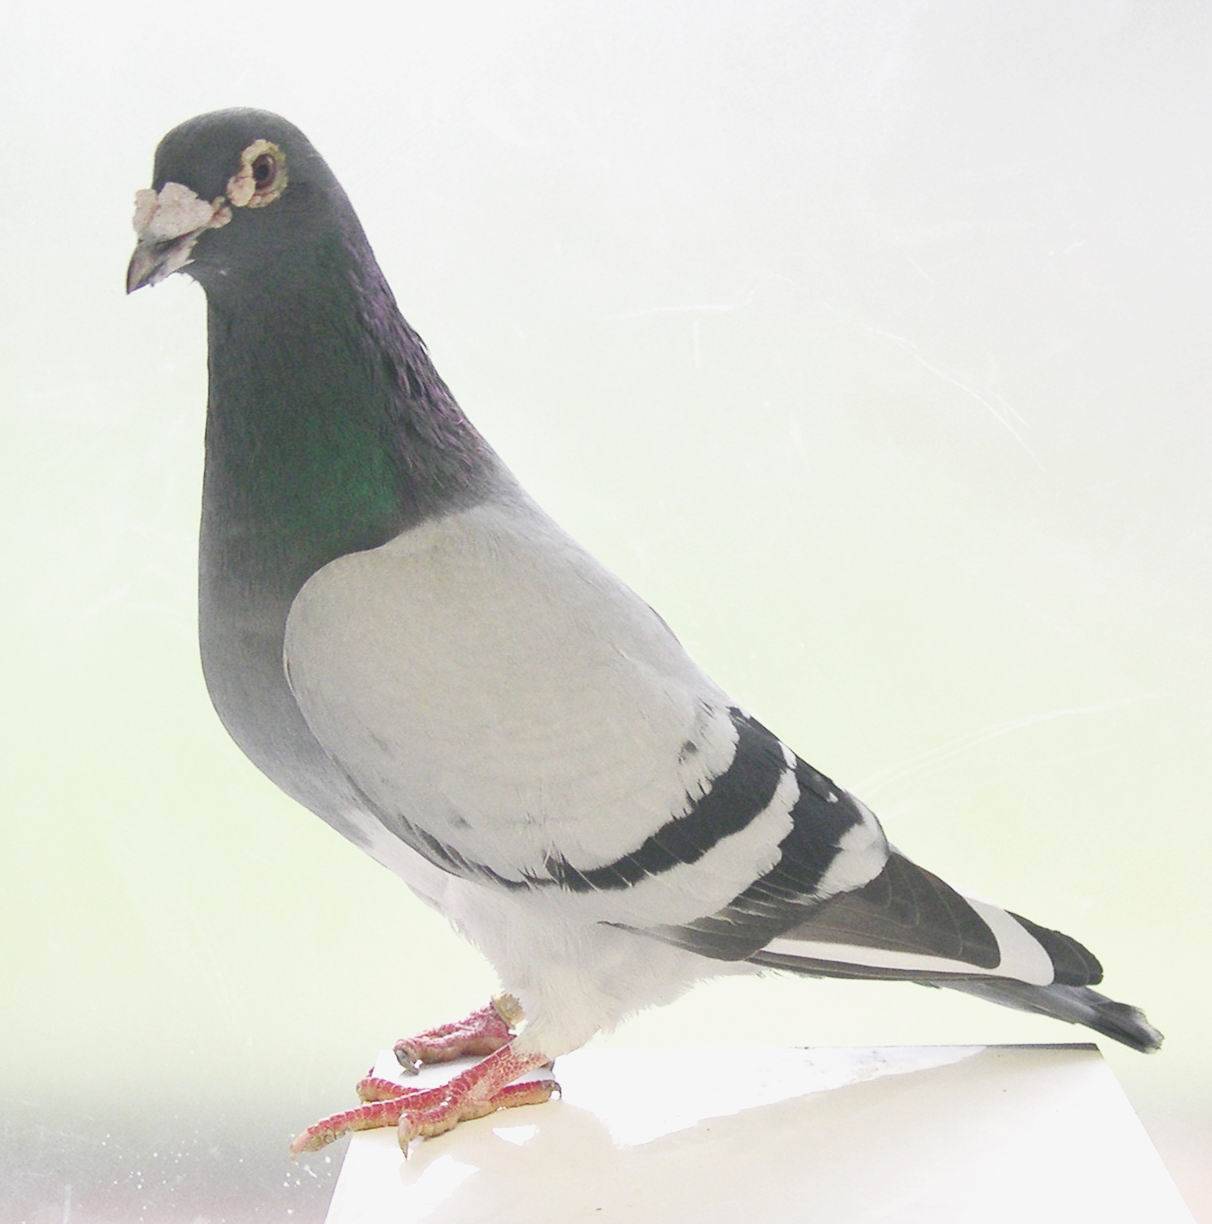 Homing-Pigeon-Picture.JPG